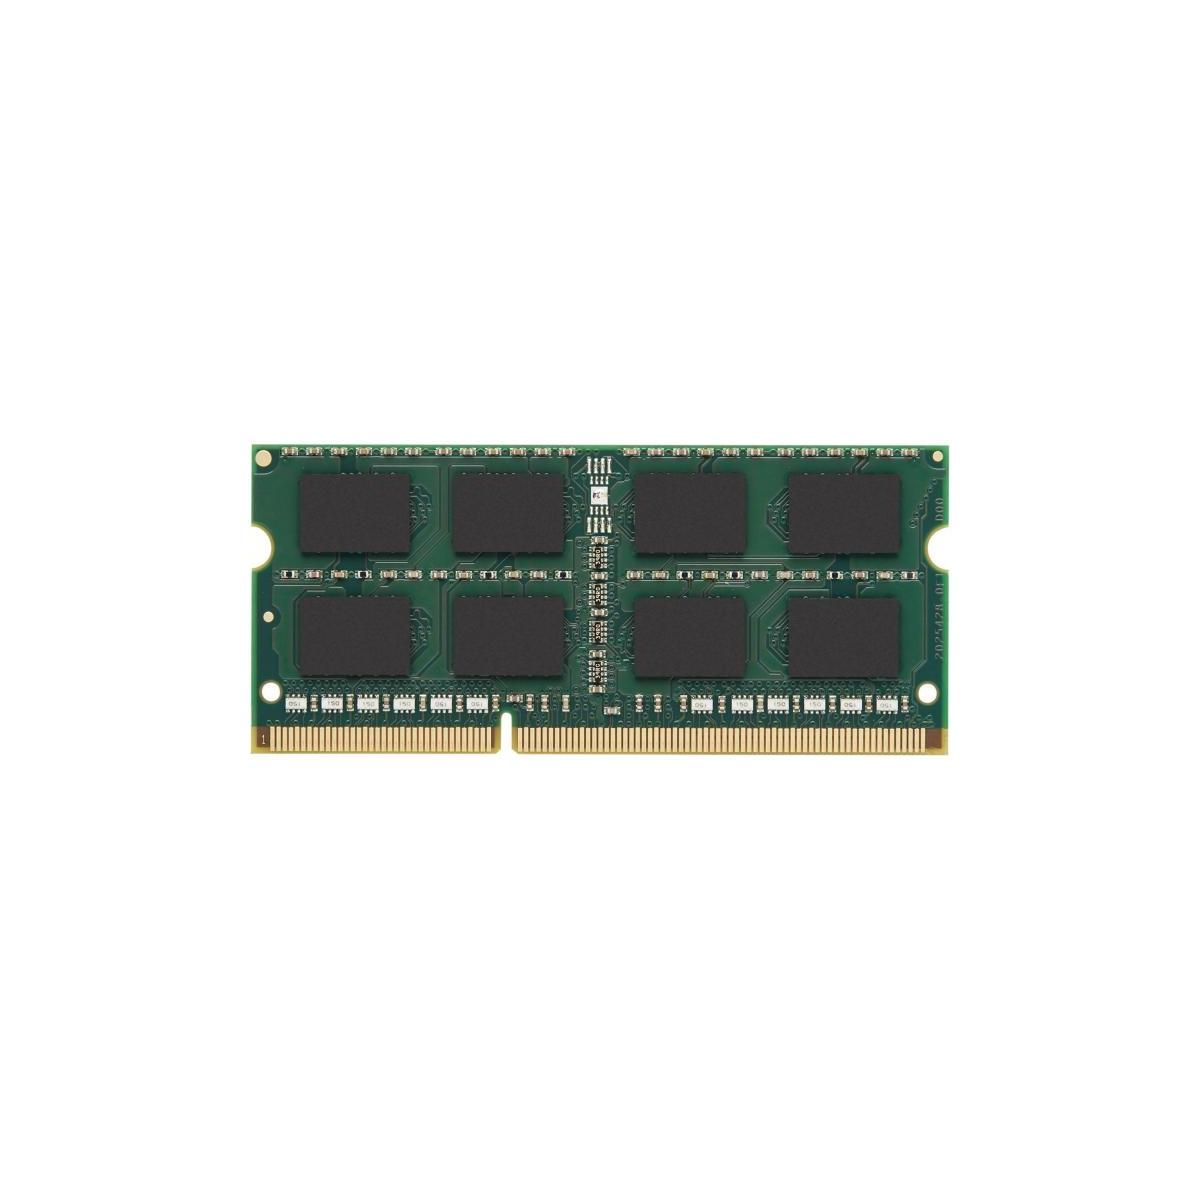 KINGSTON KVR16LS11/8 DDR3L 8GB NON-ECC DDR3L GB 8 Arbeitsspeicher Notebook